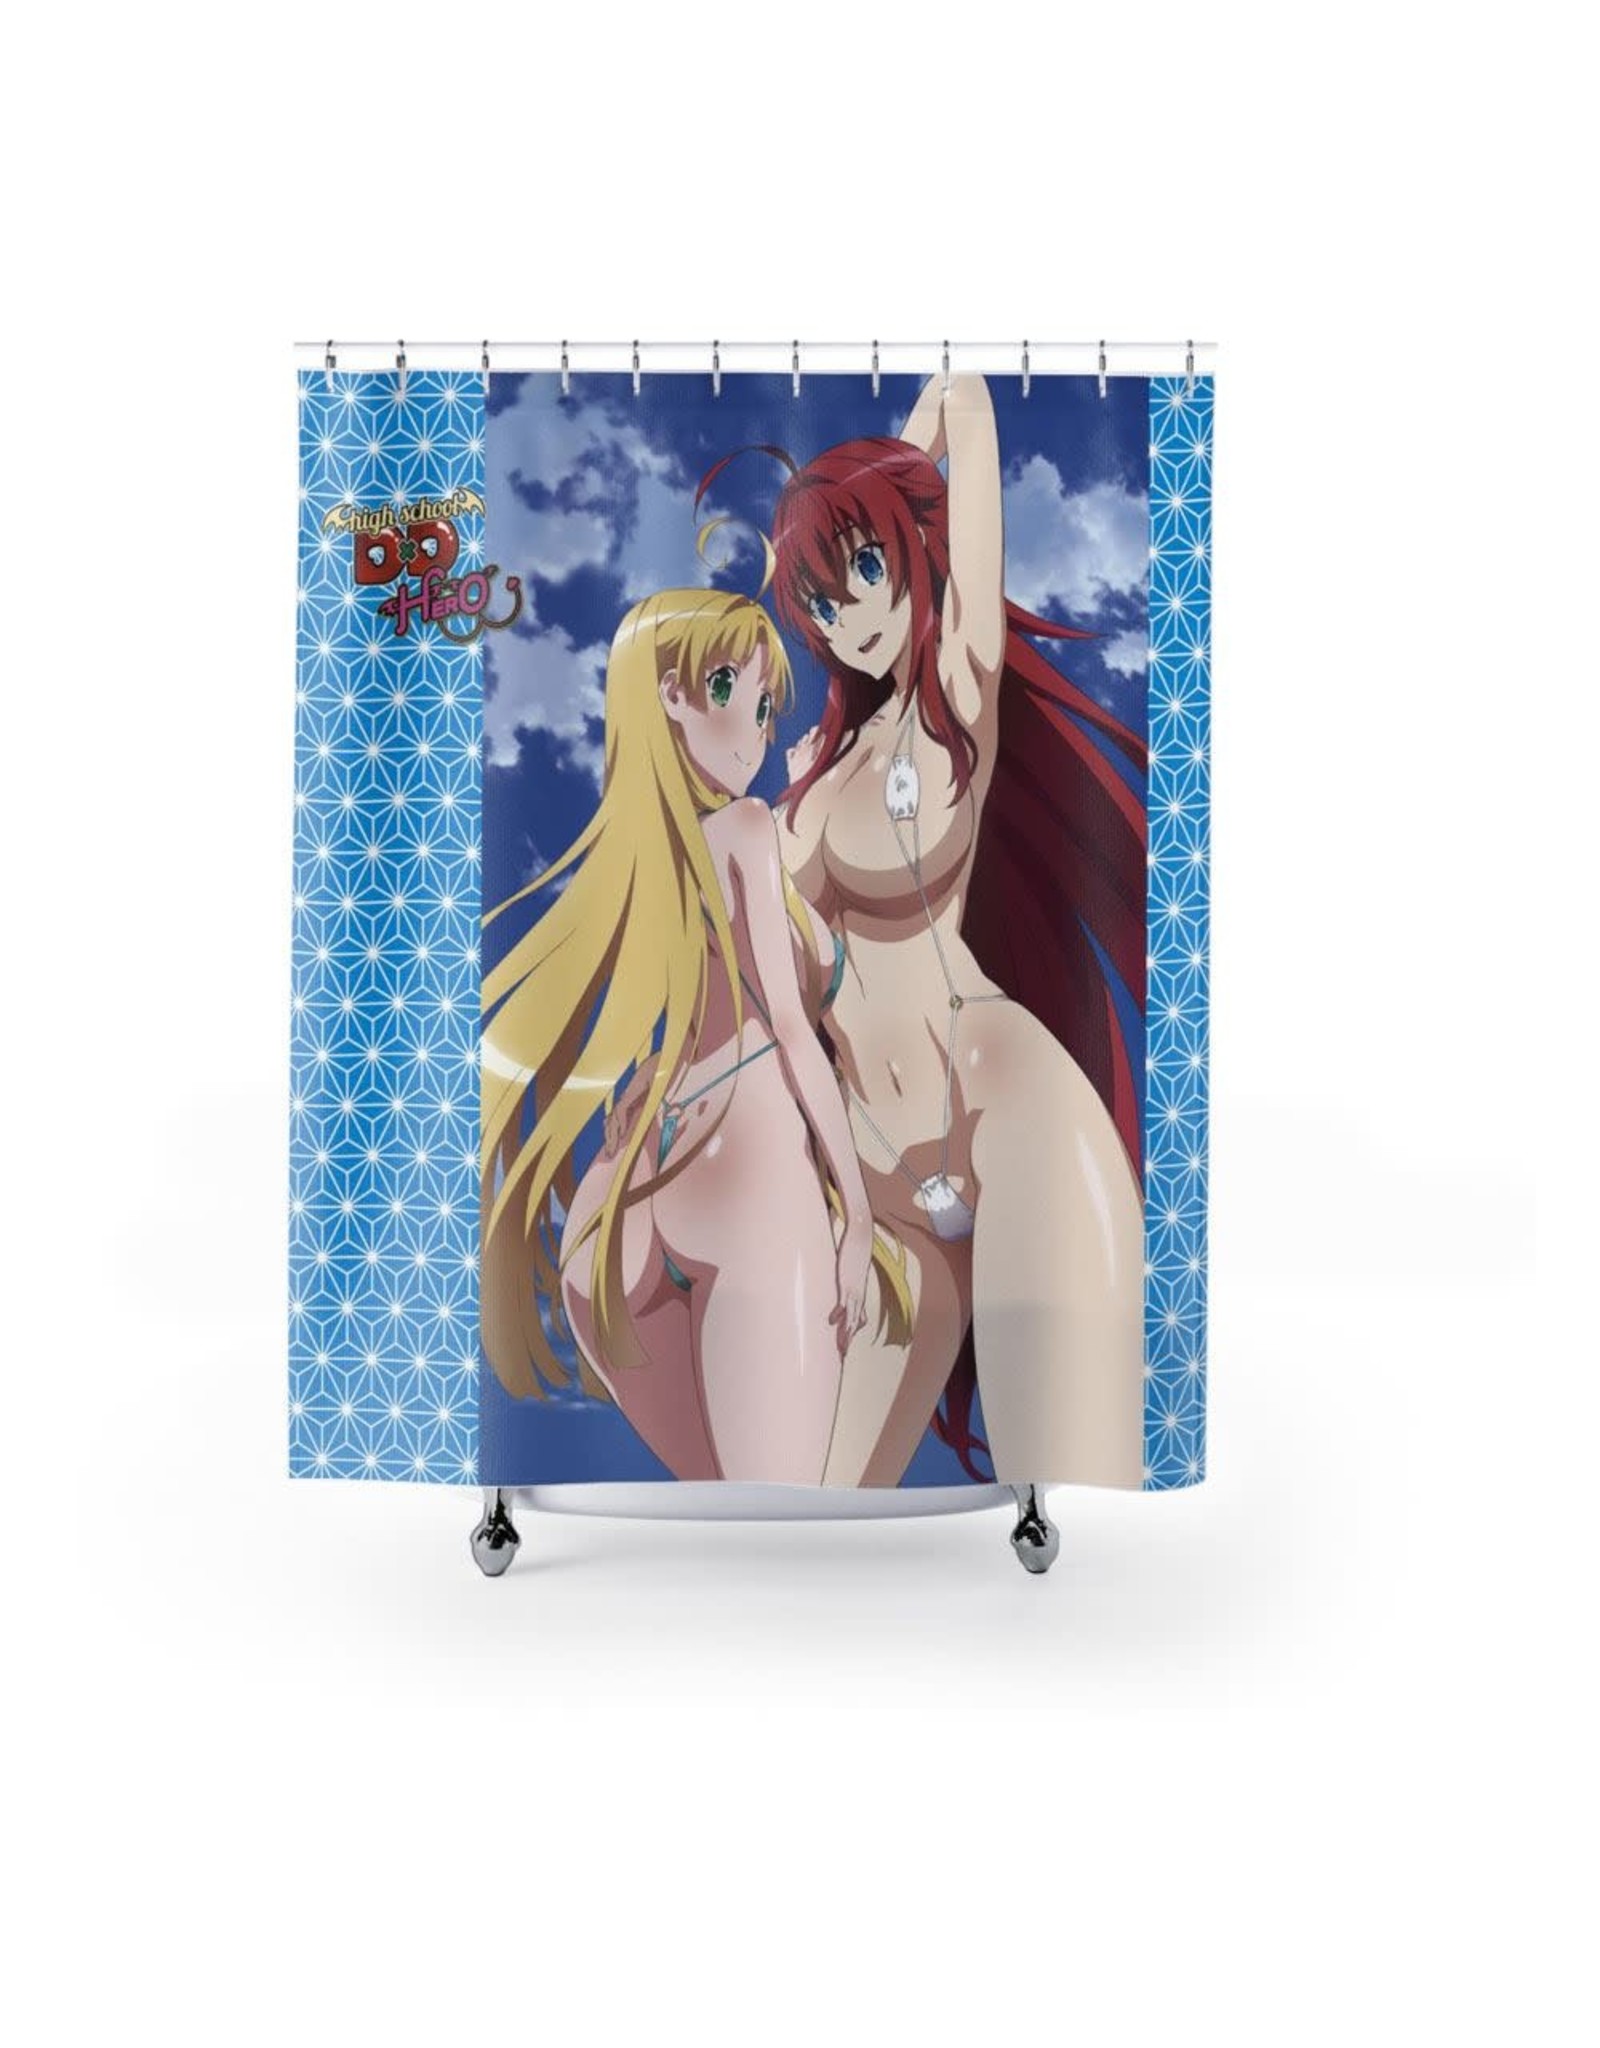 Highschool DxD Hero Shower Curtain - Rias & Asia - 180 x 180 cm